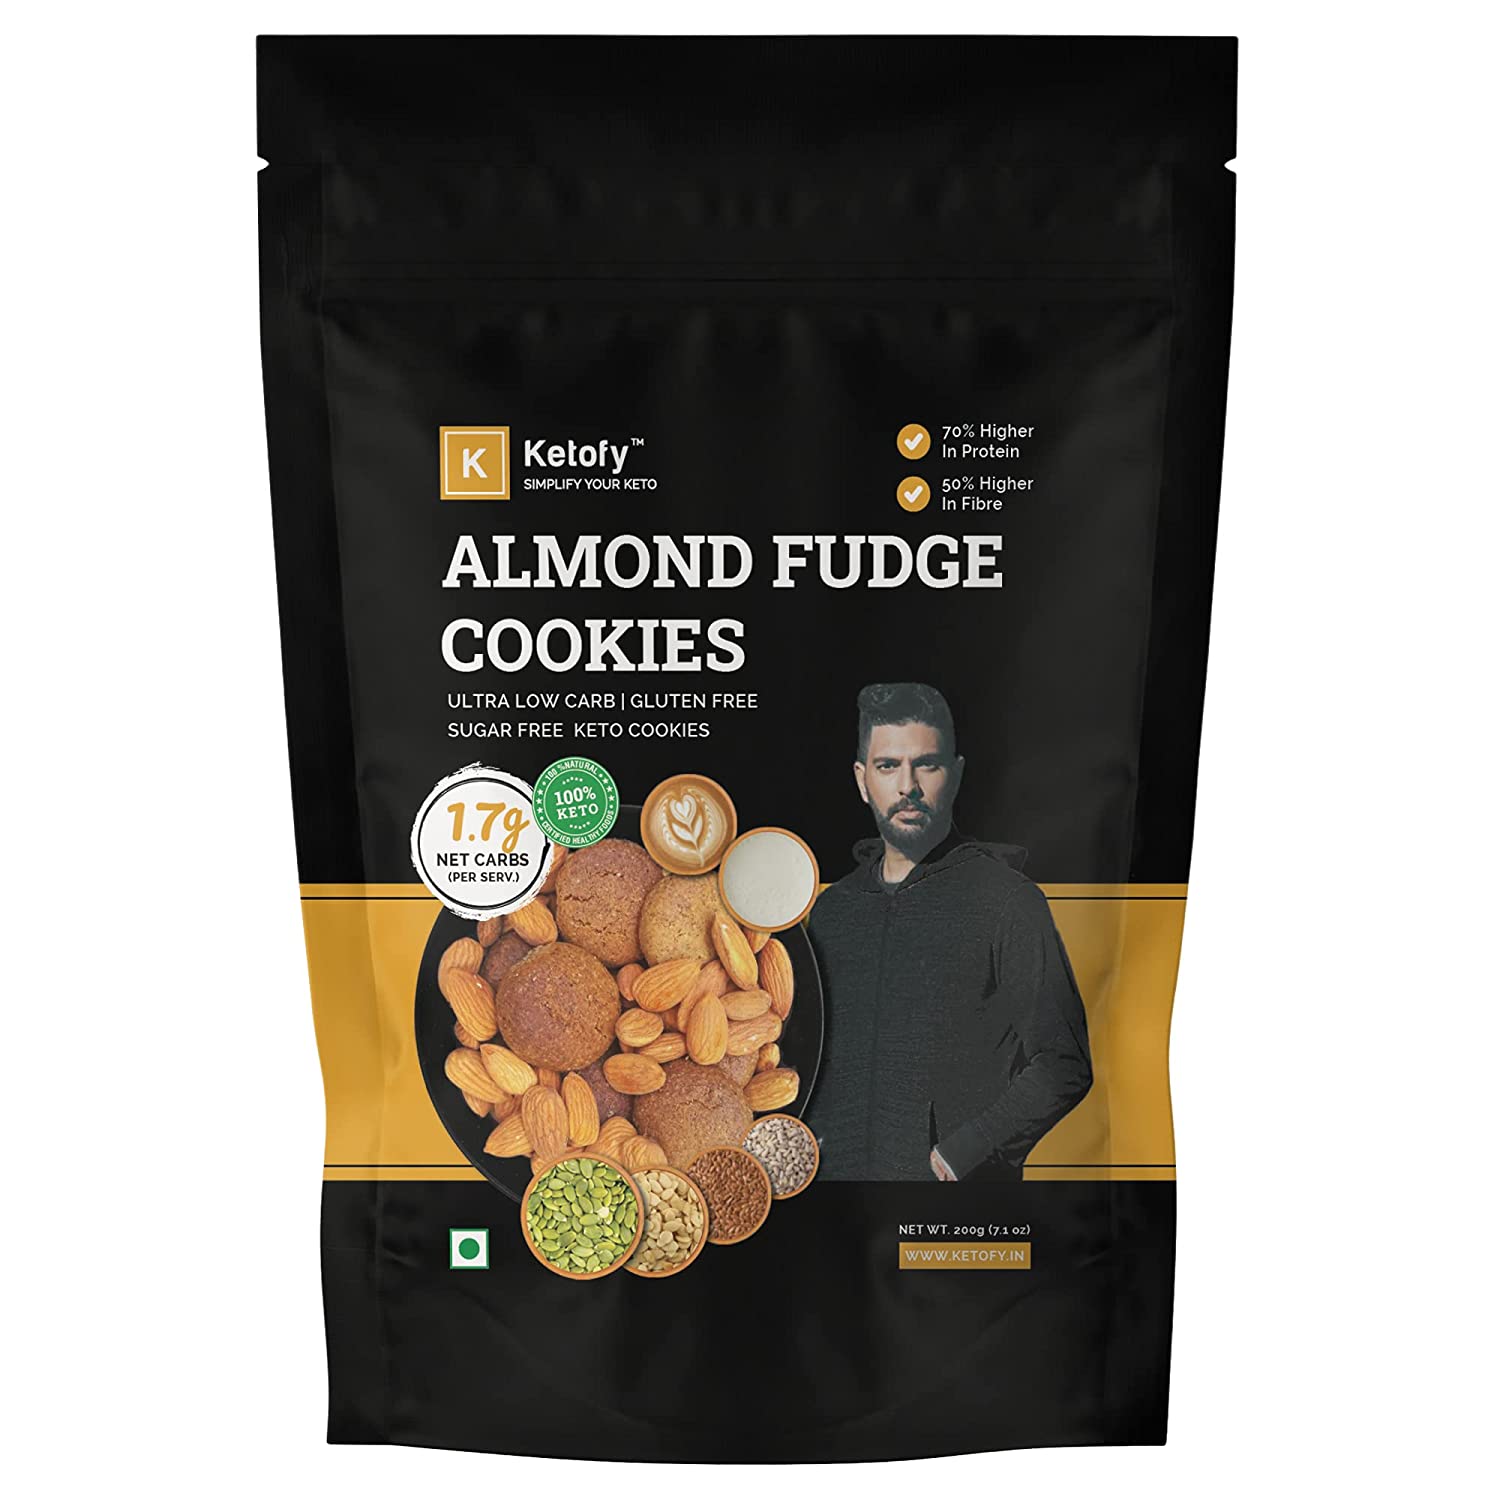 Ketofy Almond Fudge Cookies Image